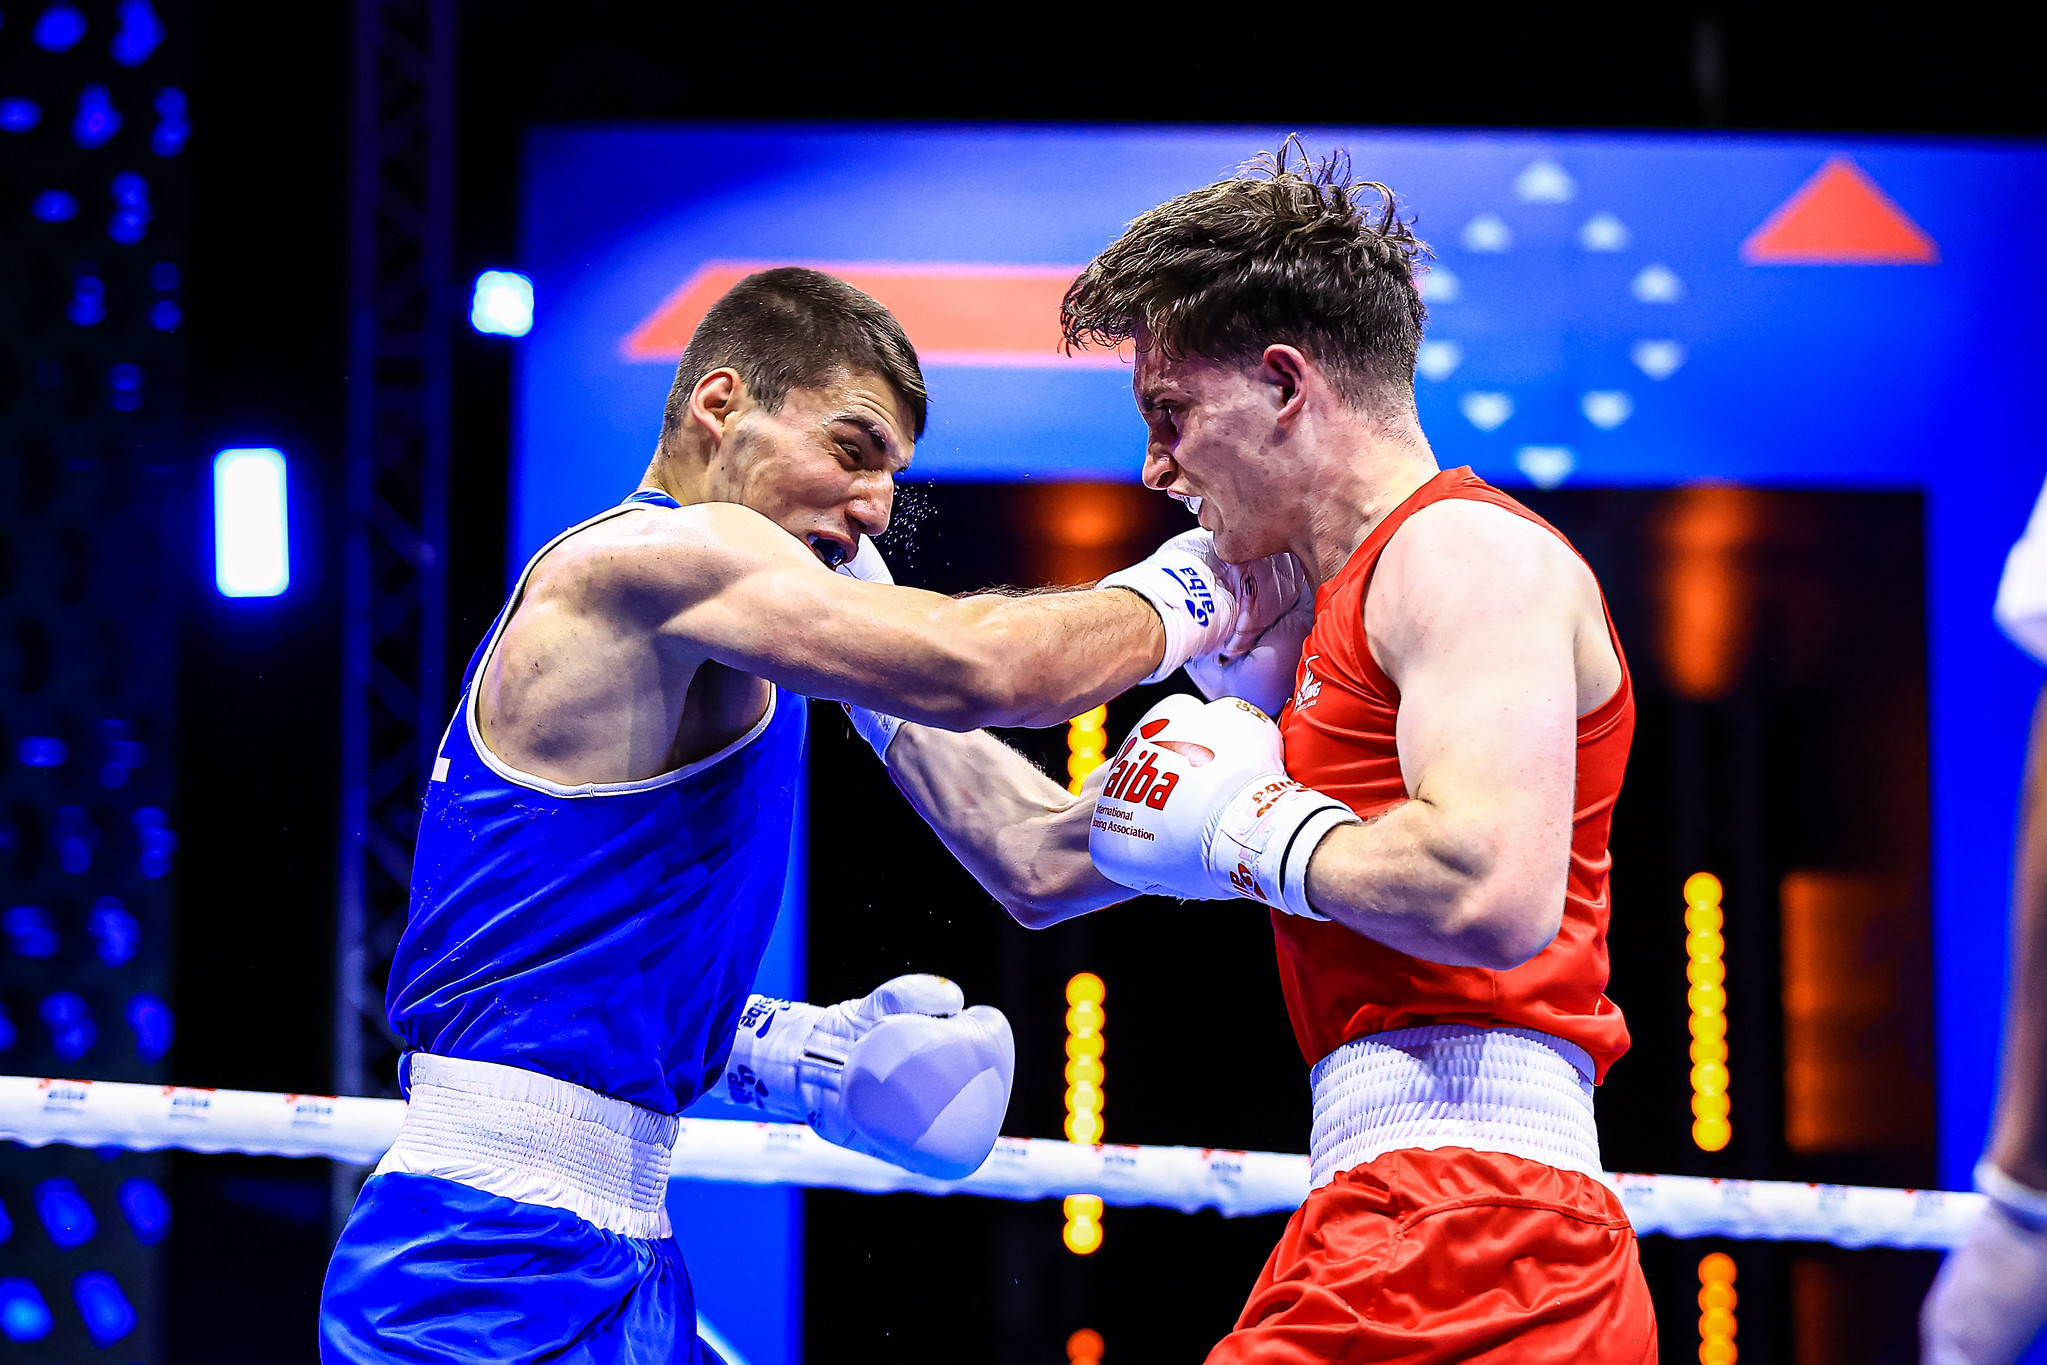 Scotland's Sam Hickey, right, defeated Bulgaria's Rami Kiwan, left in the under-75kg ©AIBA